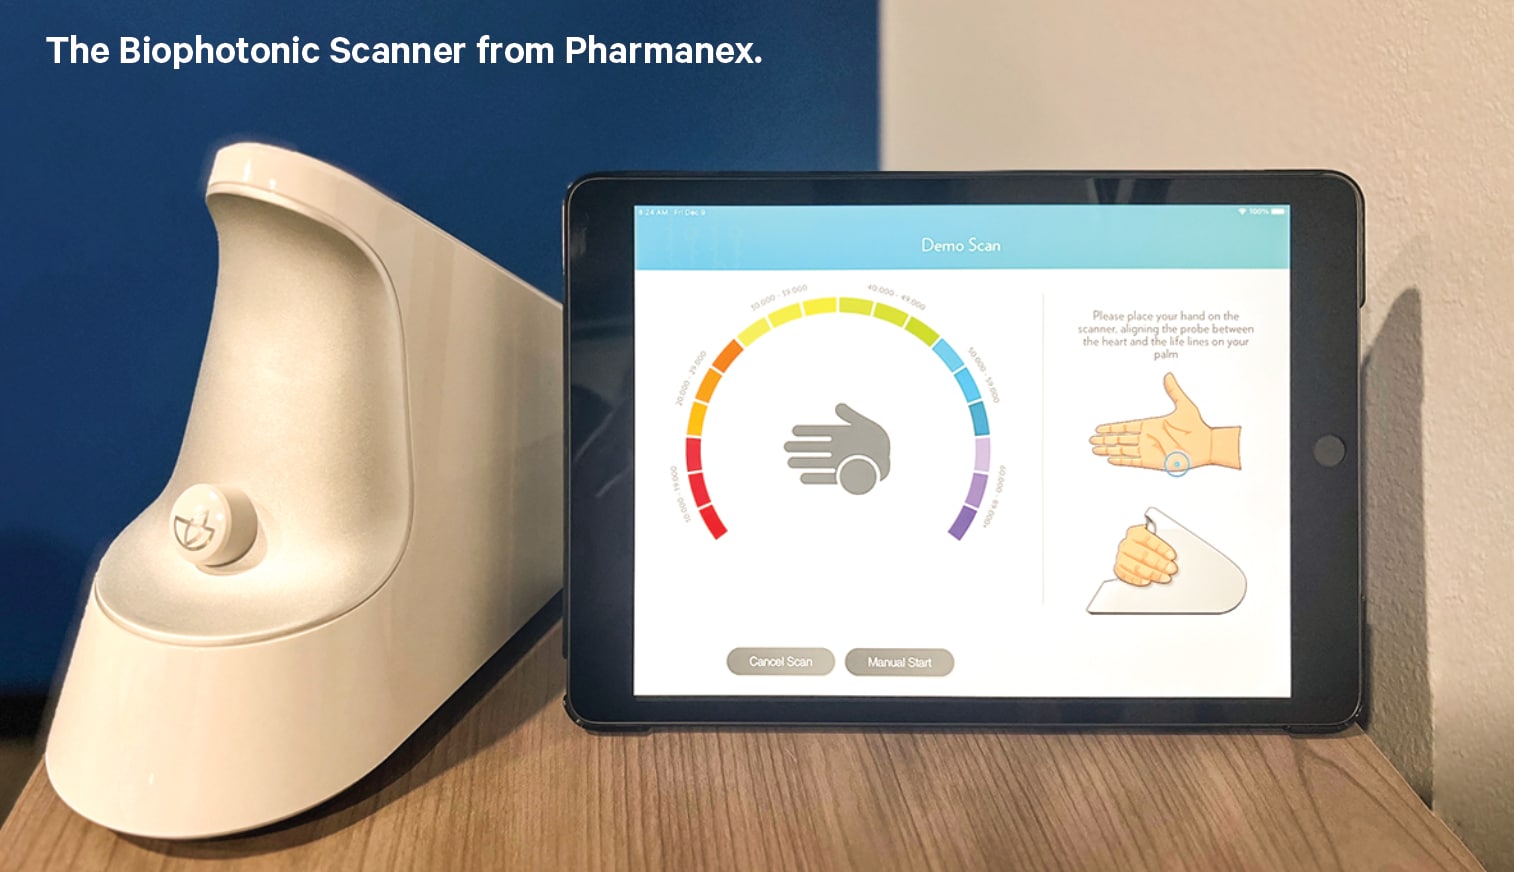 The Biophotonic Scanner from Pharmanex.